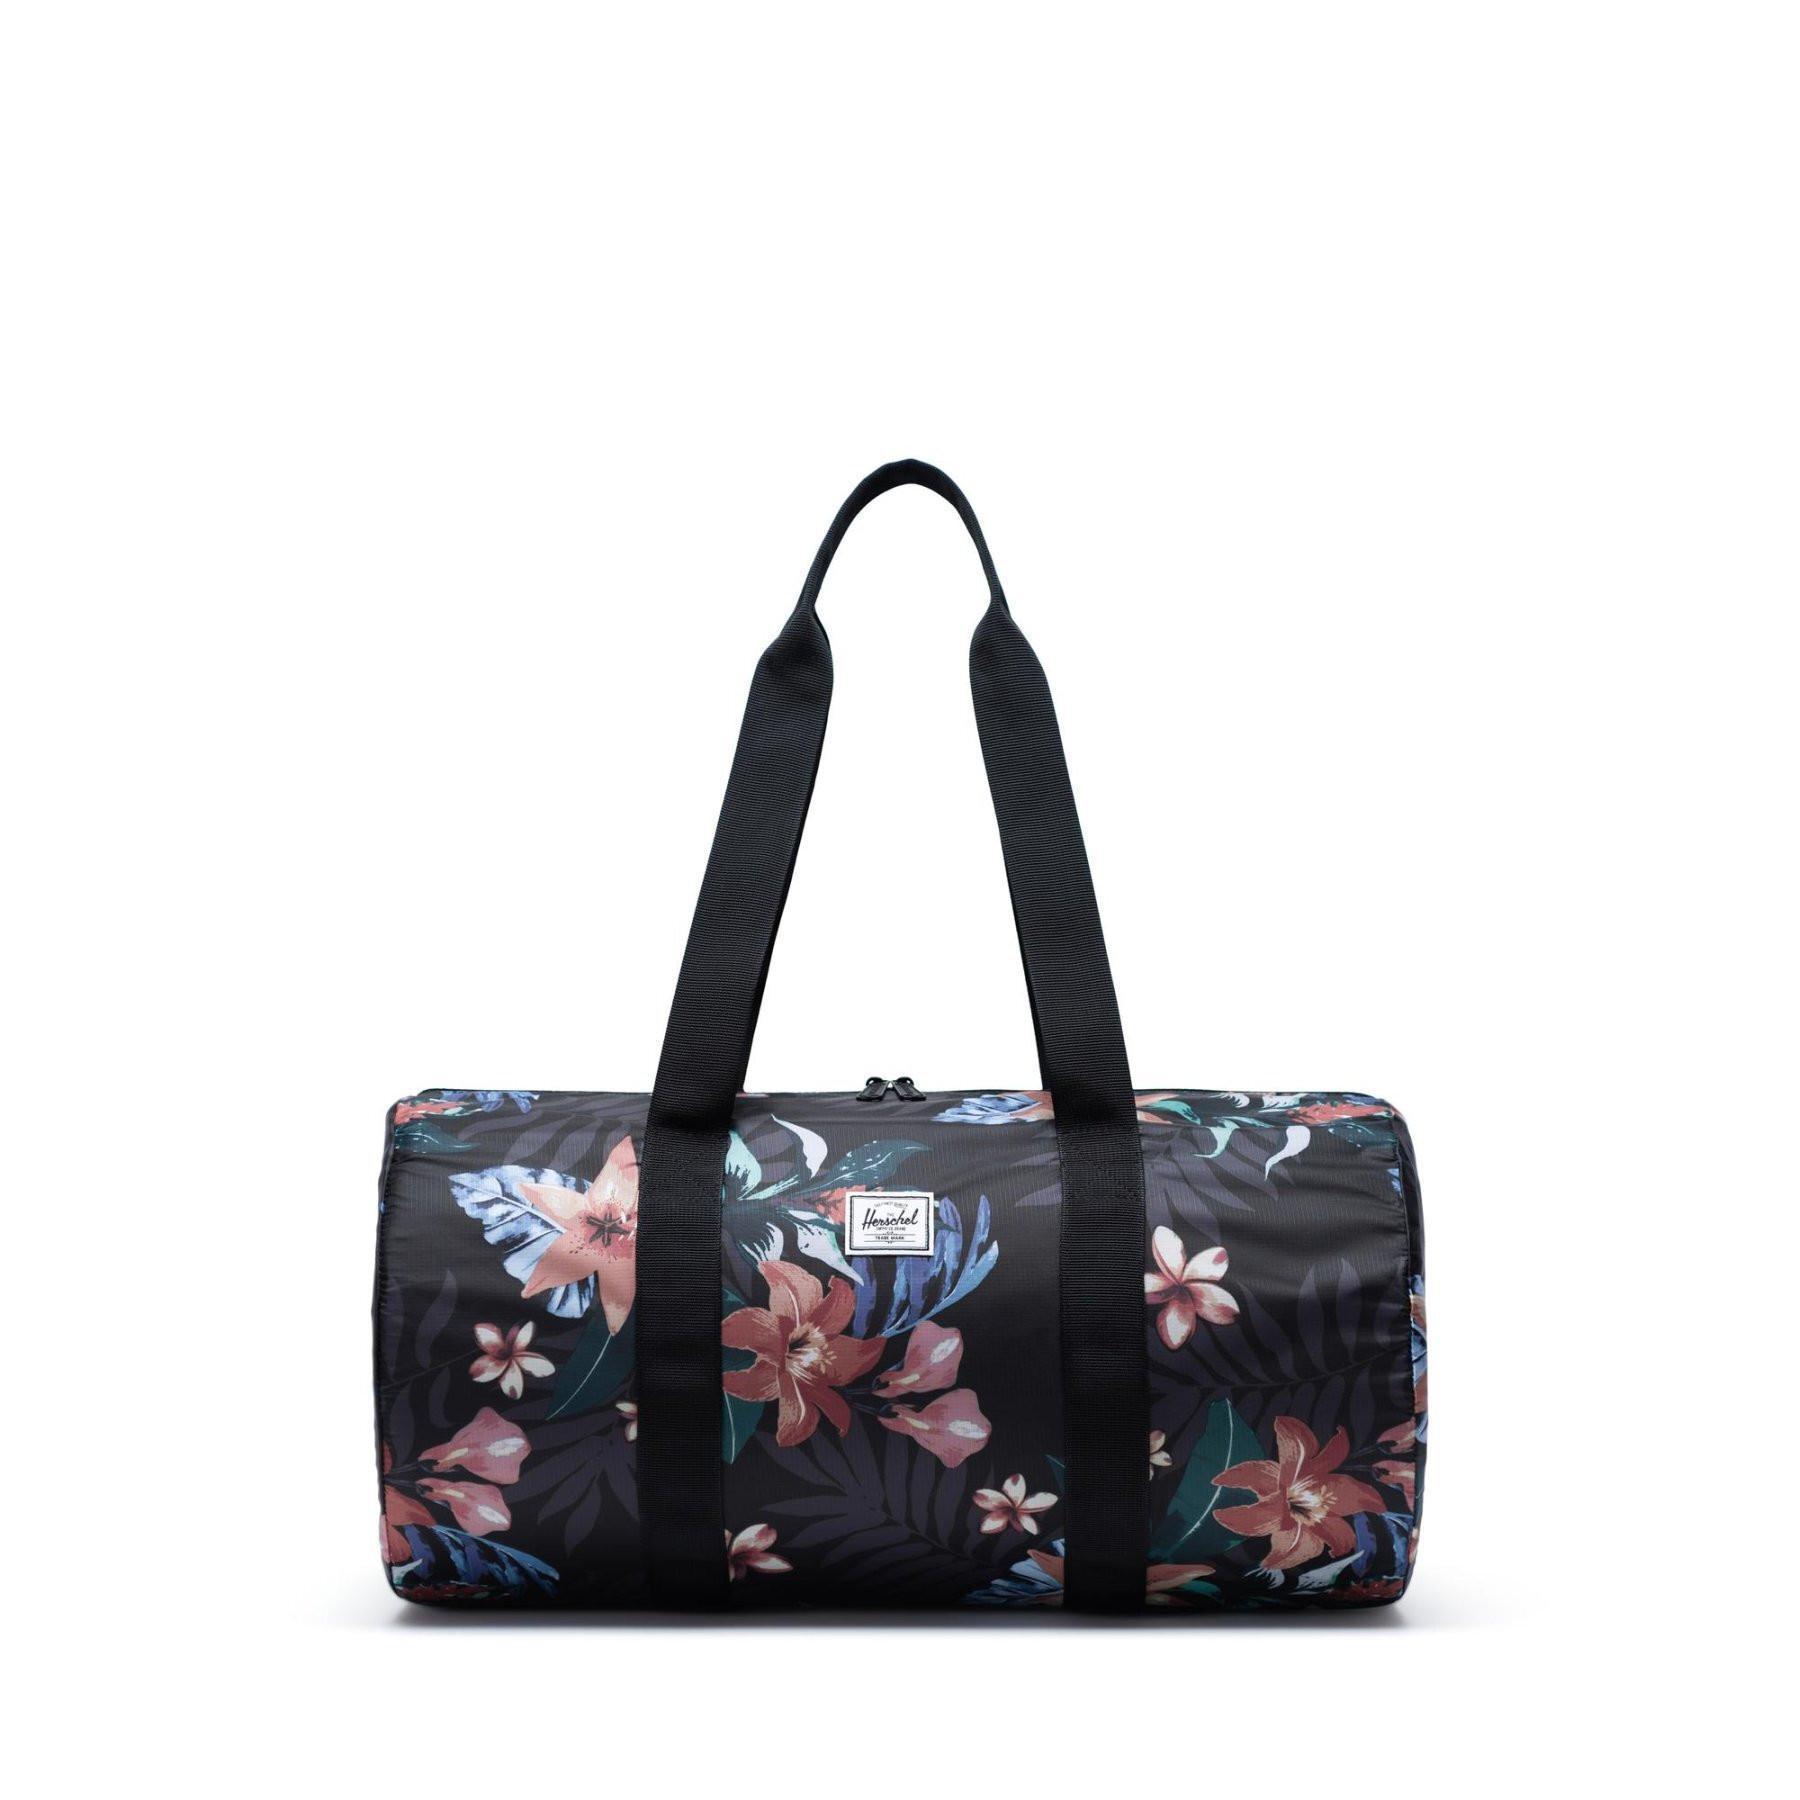 Torba podróżna Herschel packable duffle summer floral black